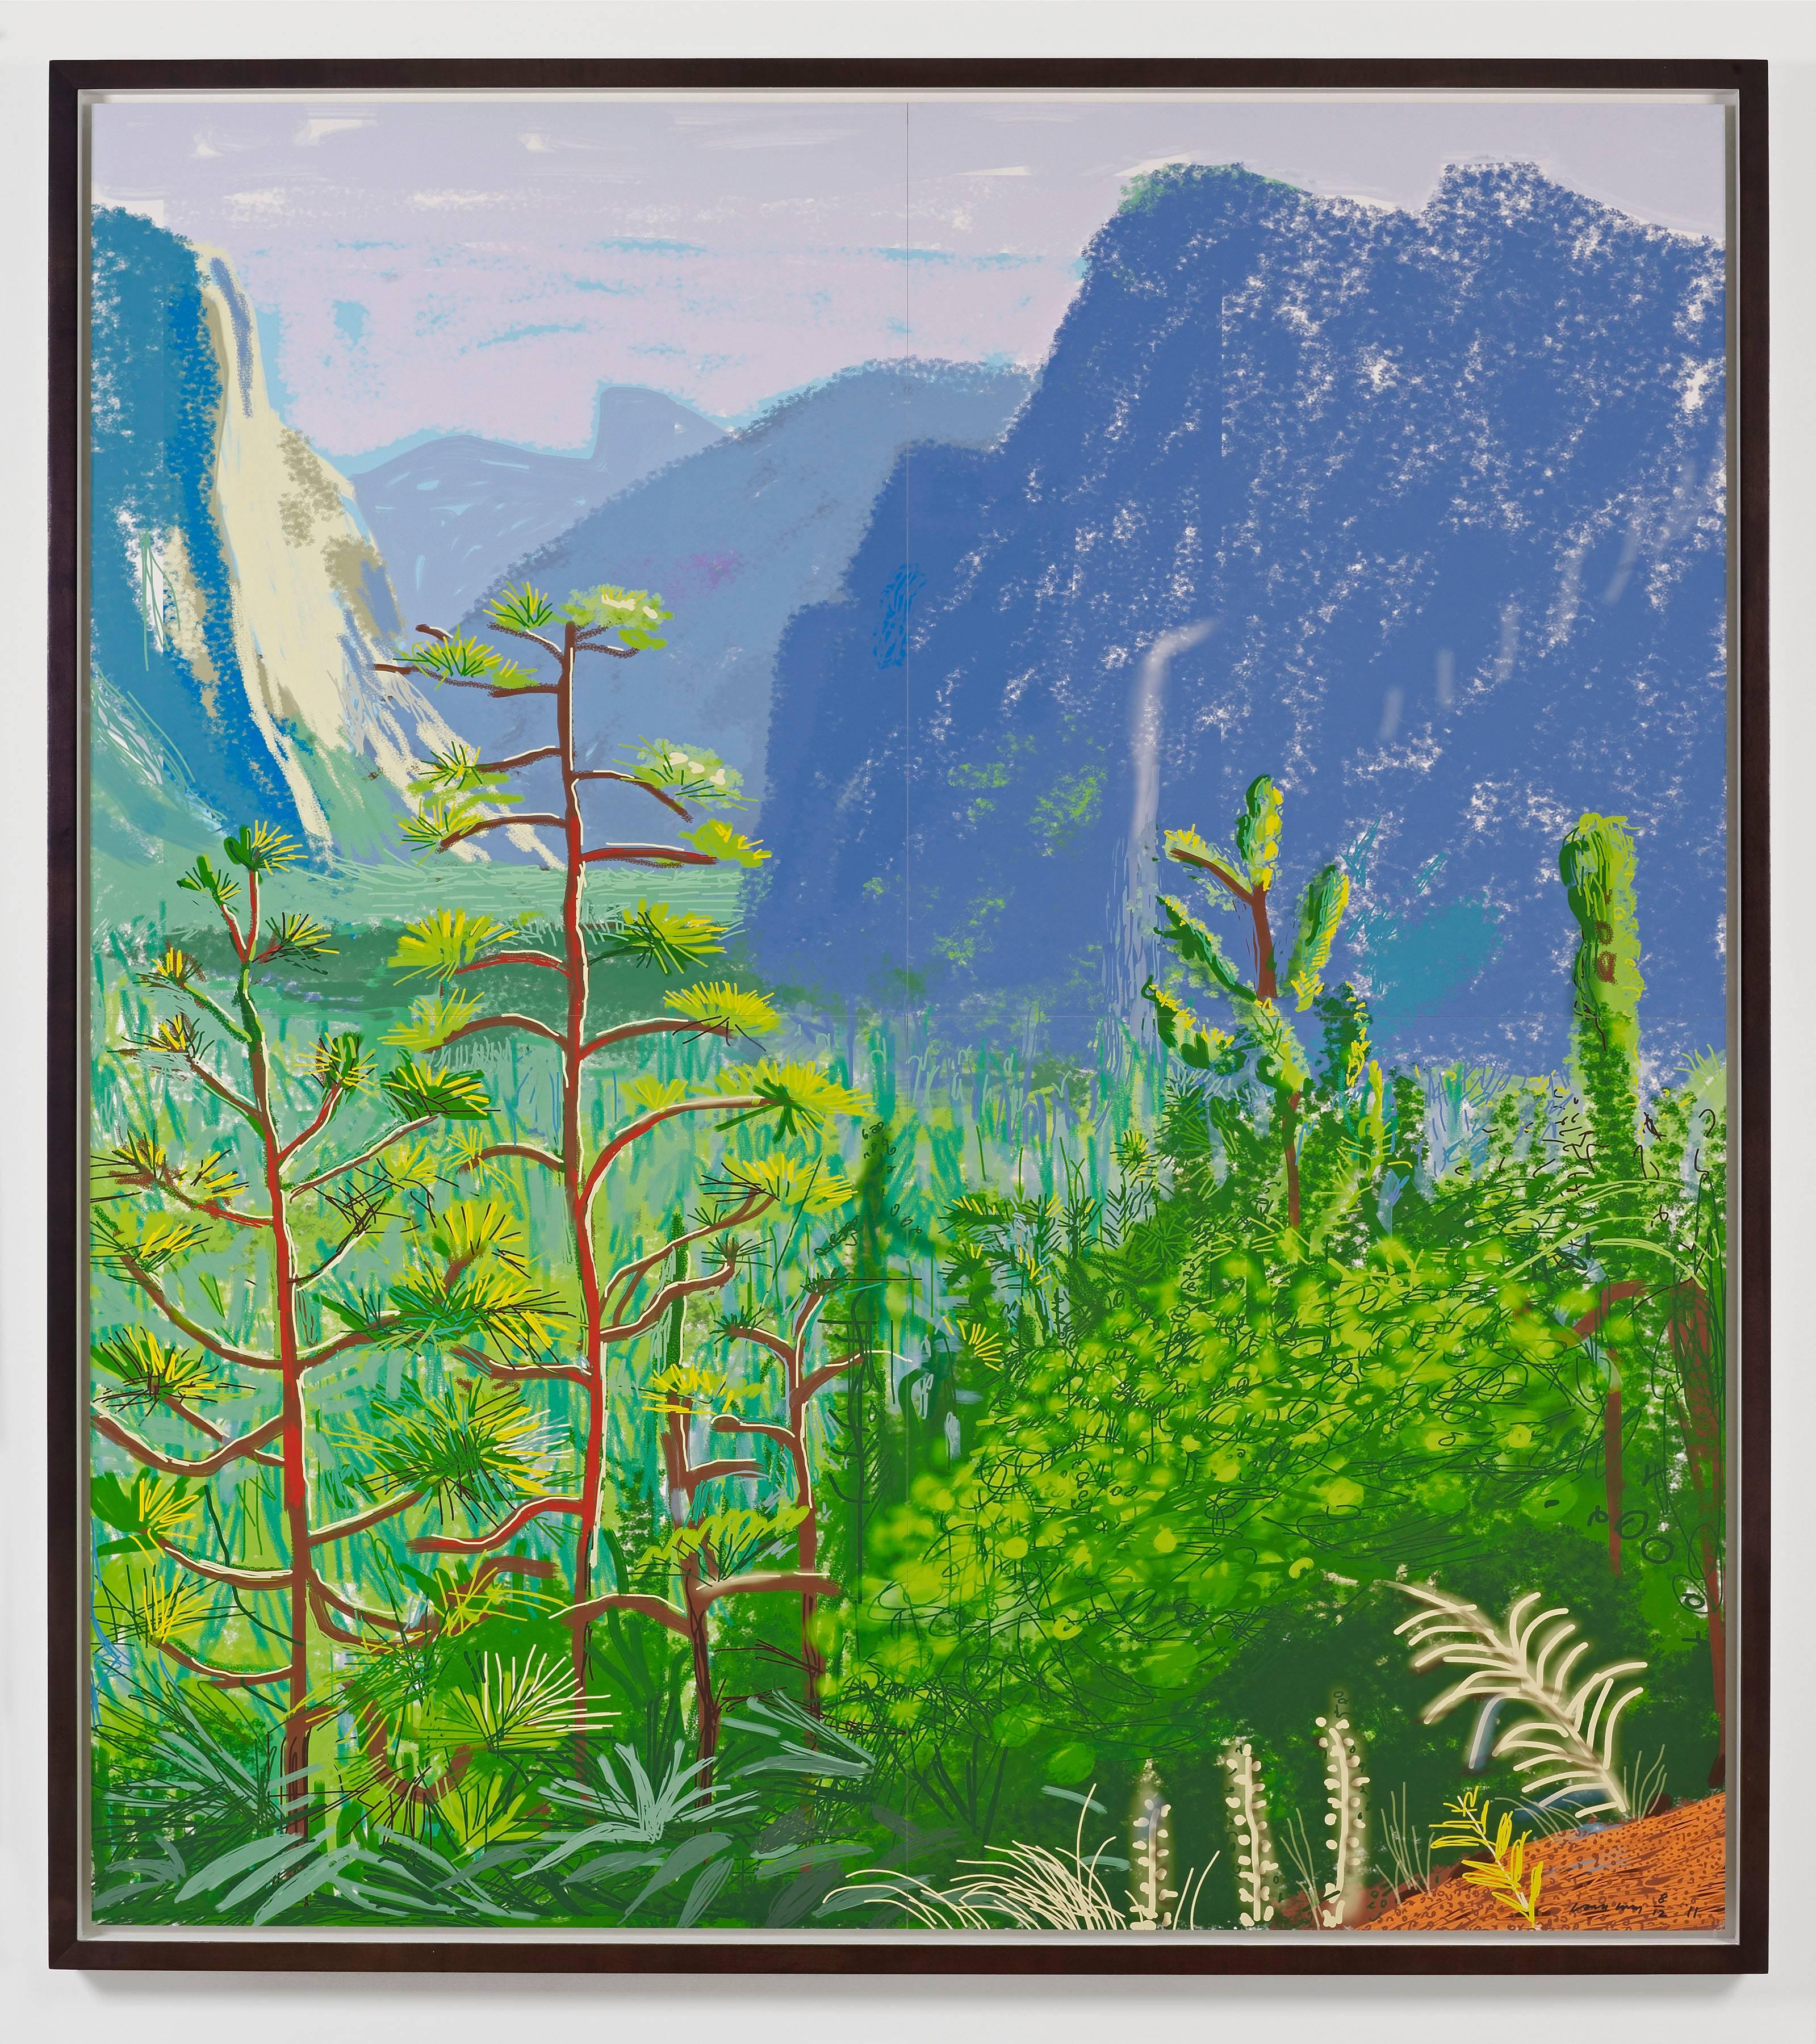 Yosemite 1, October 16th 2011 - Print by David Hockney